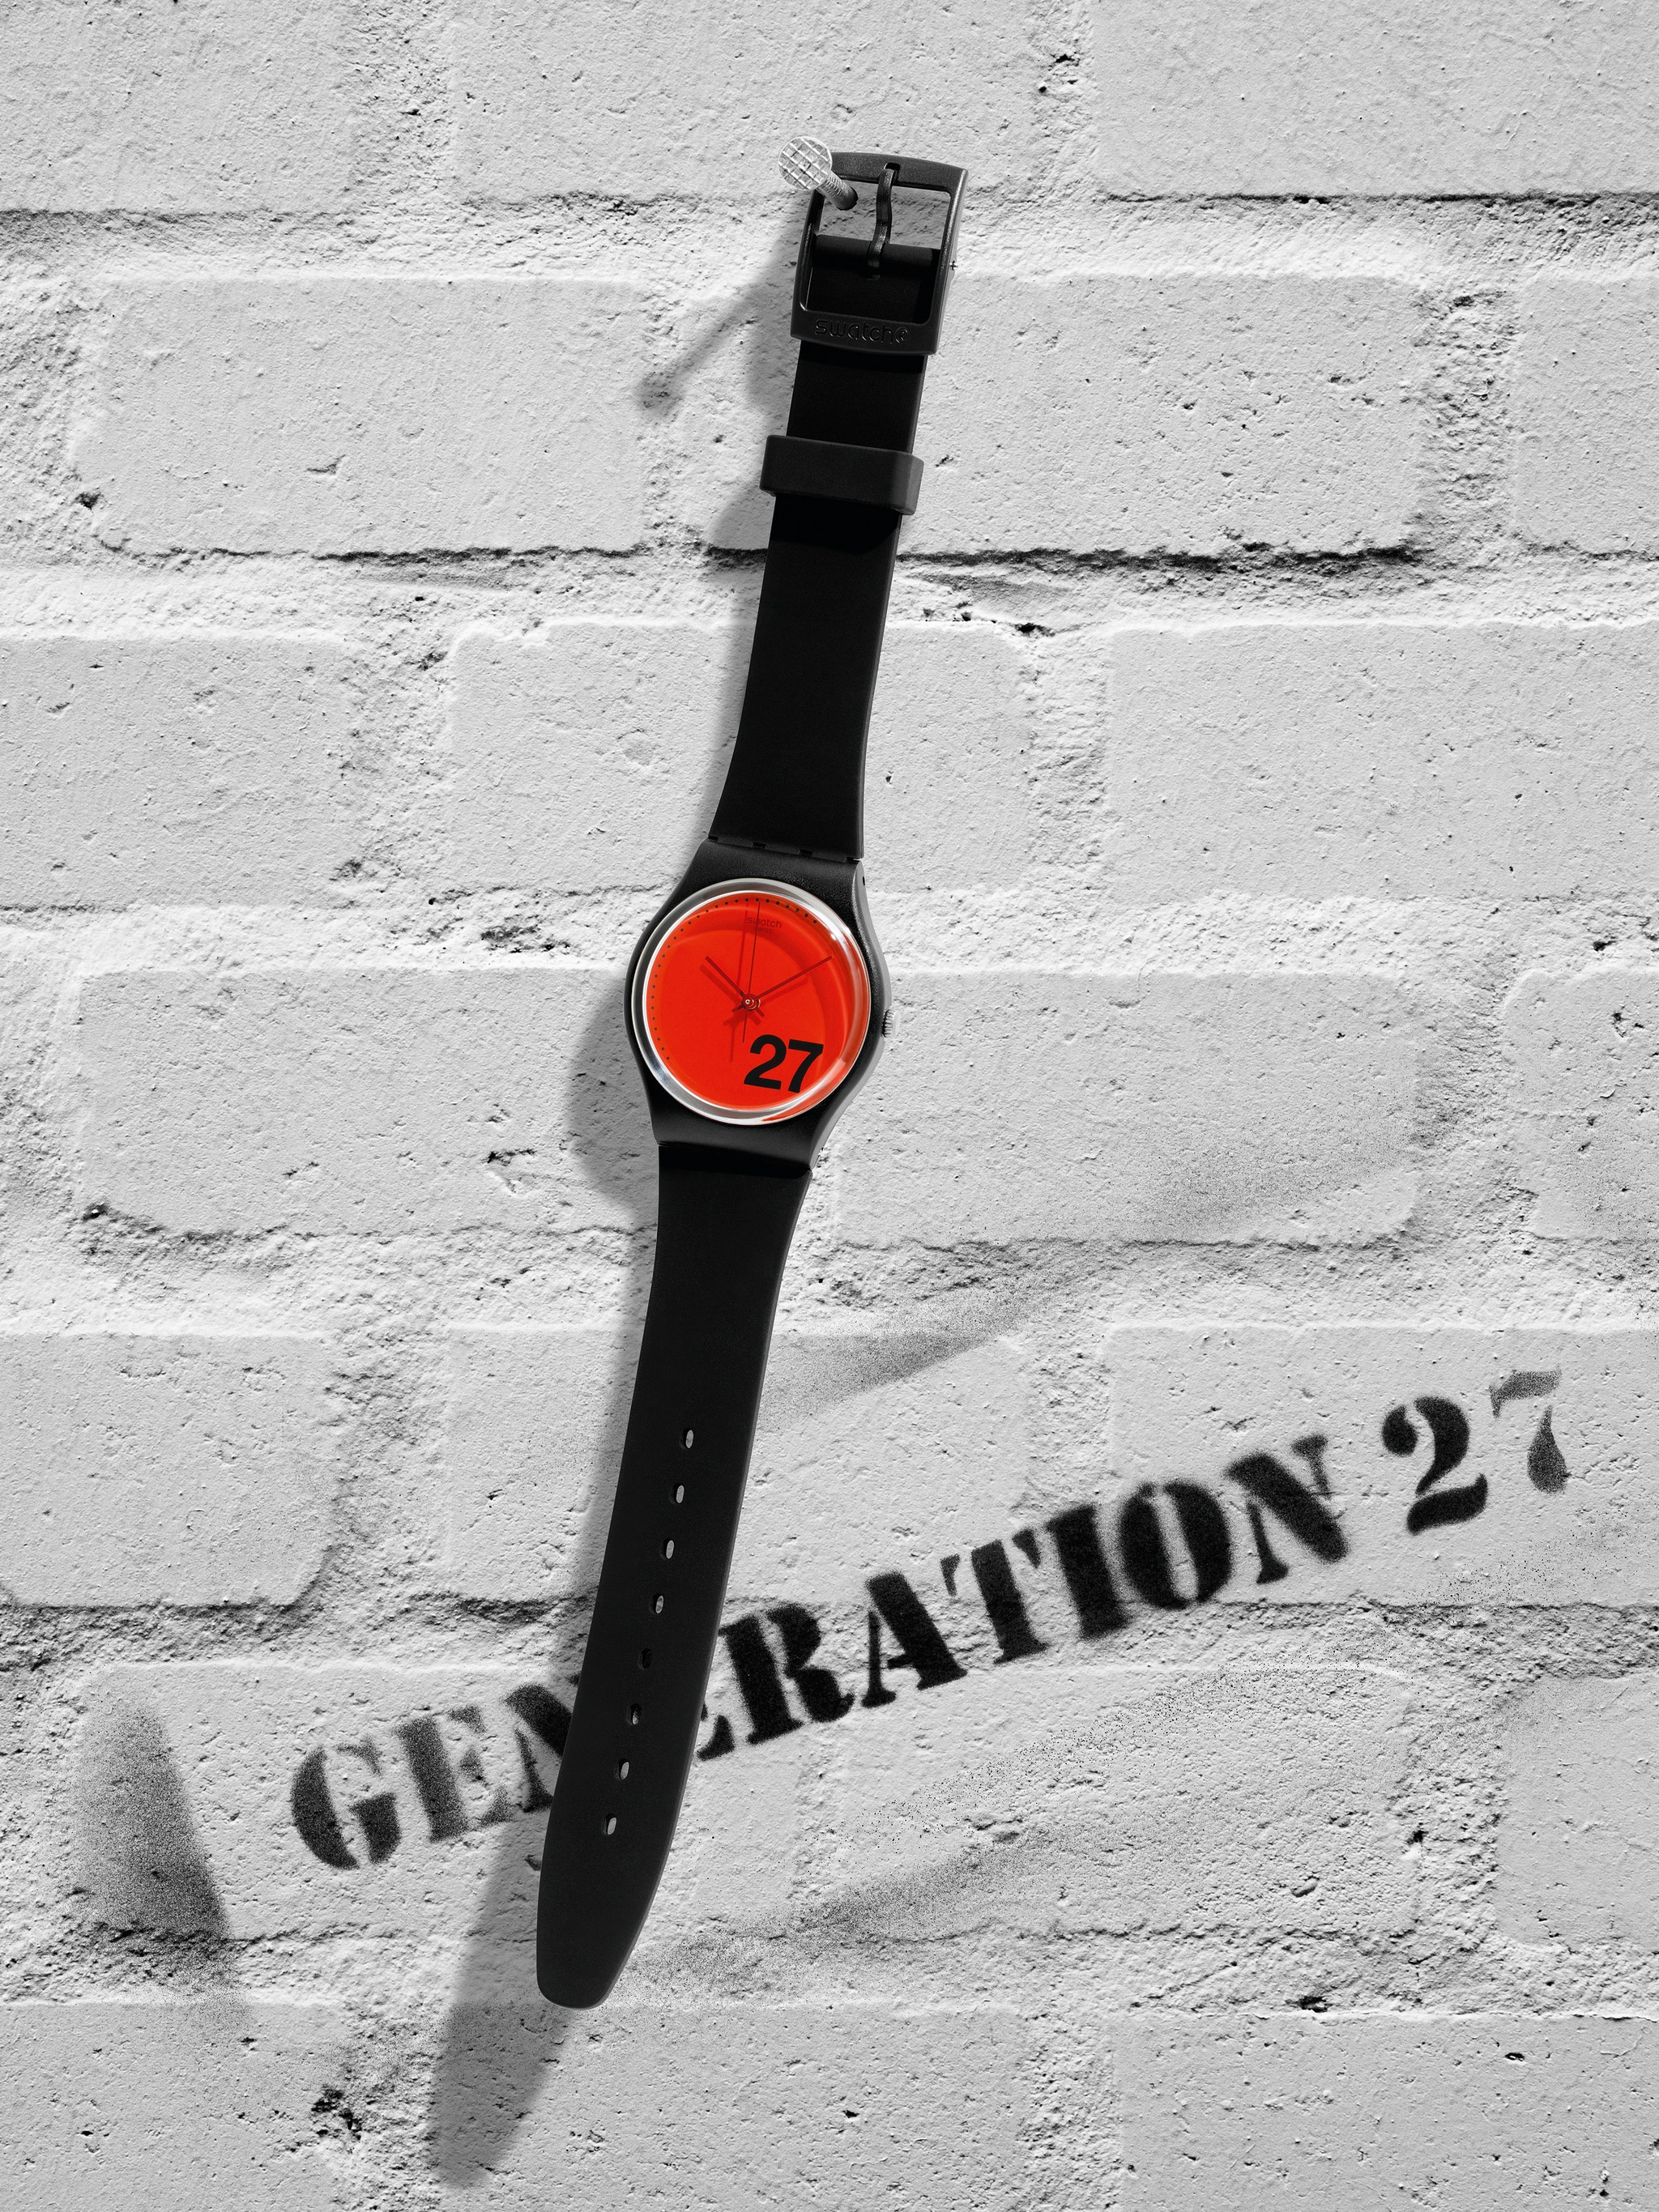 SWATCH GENERATION 27 PVPR 45€_.jpg